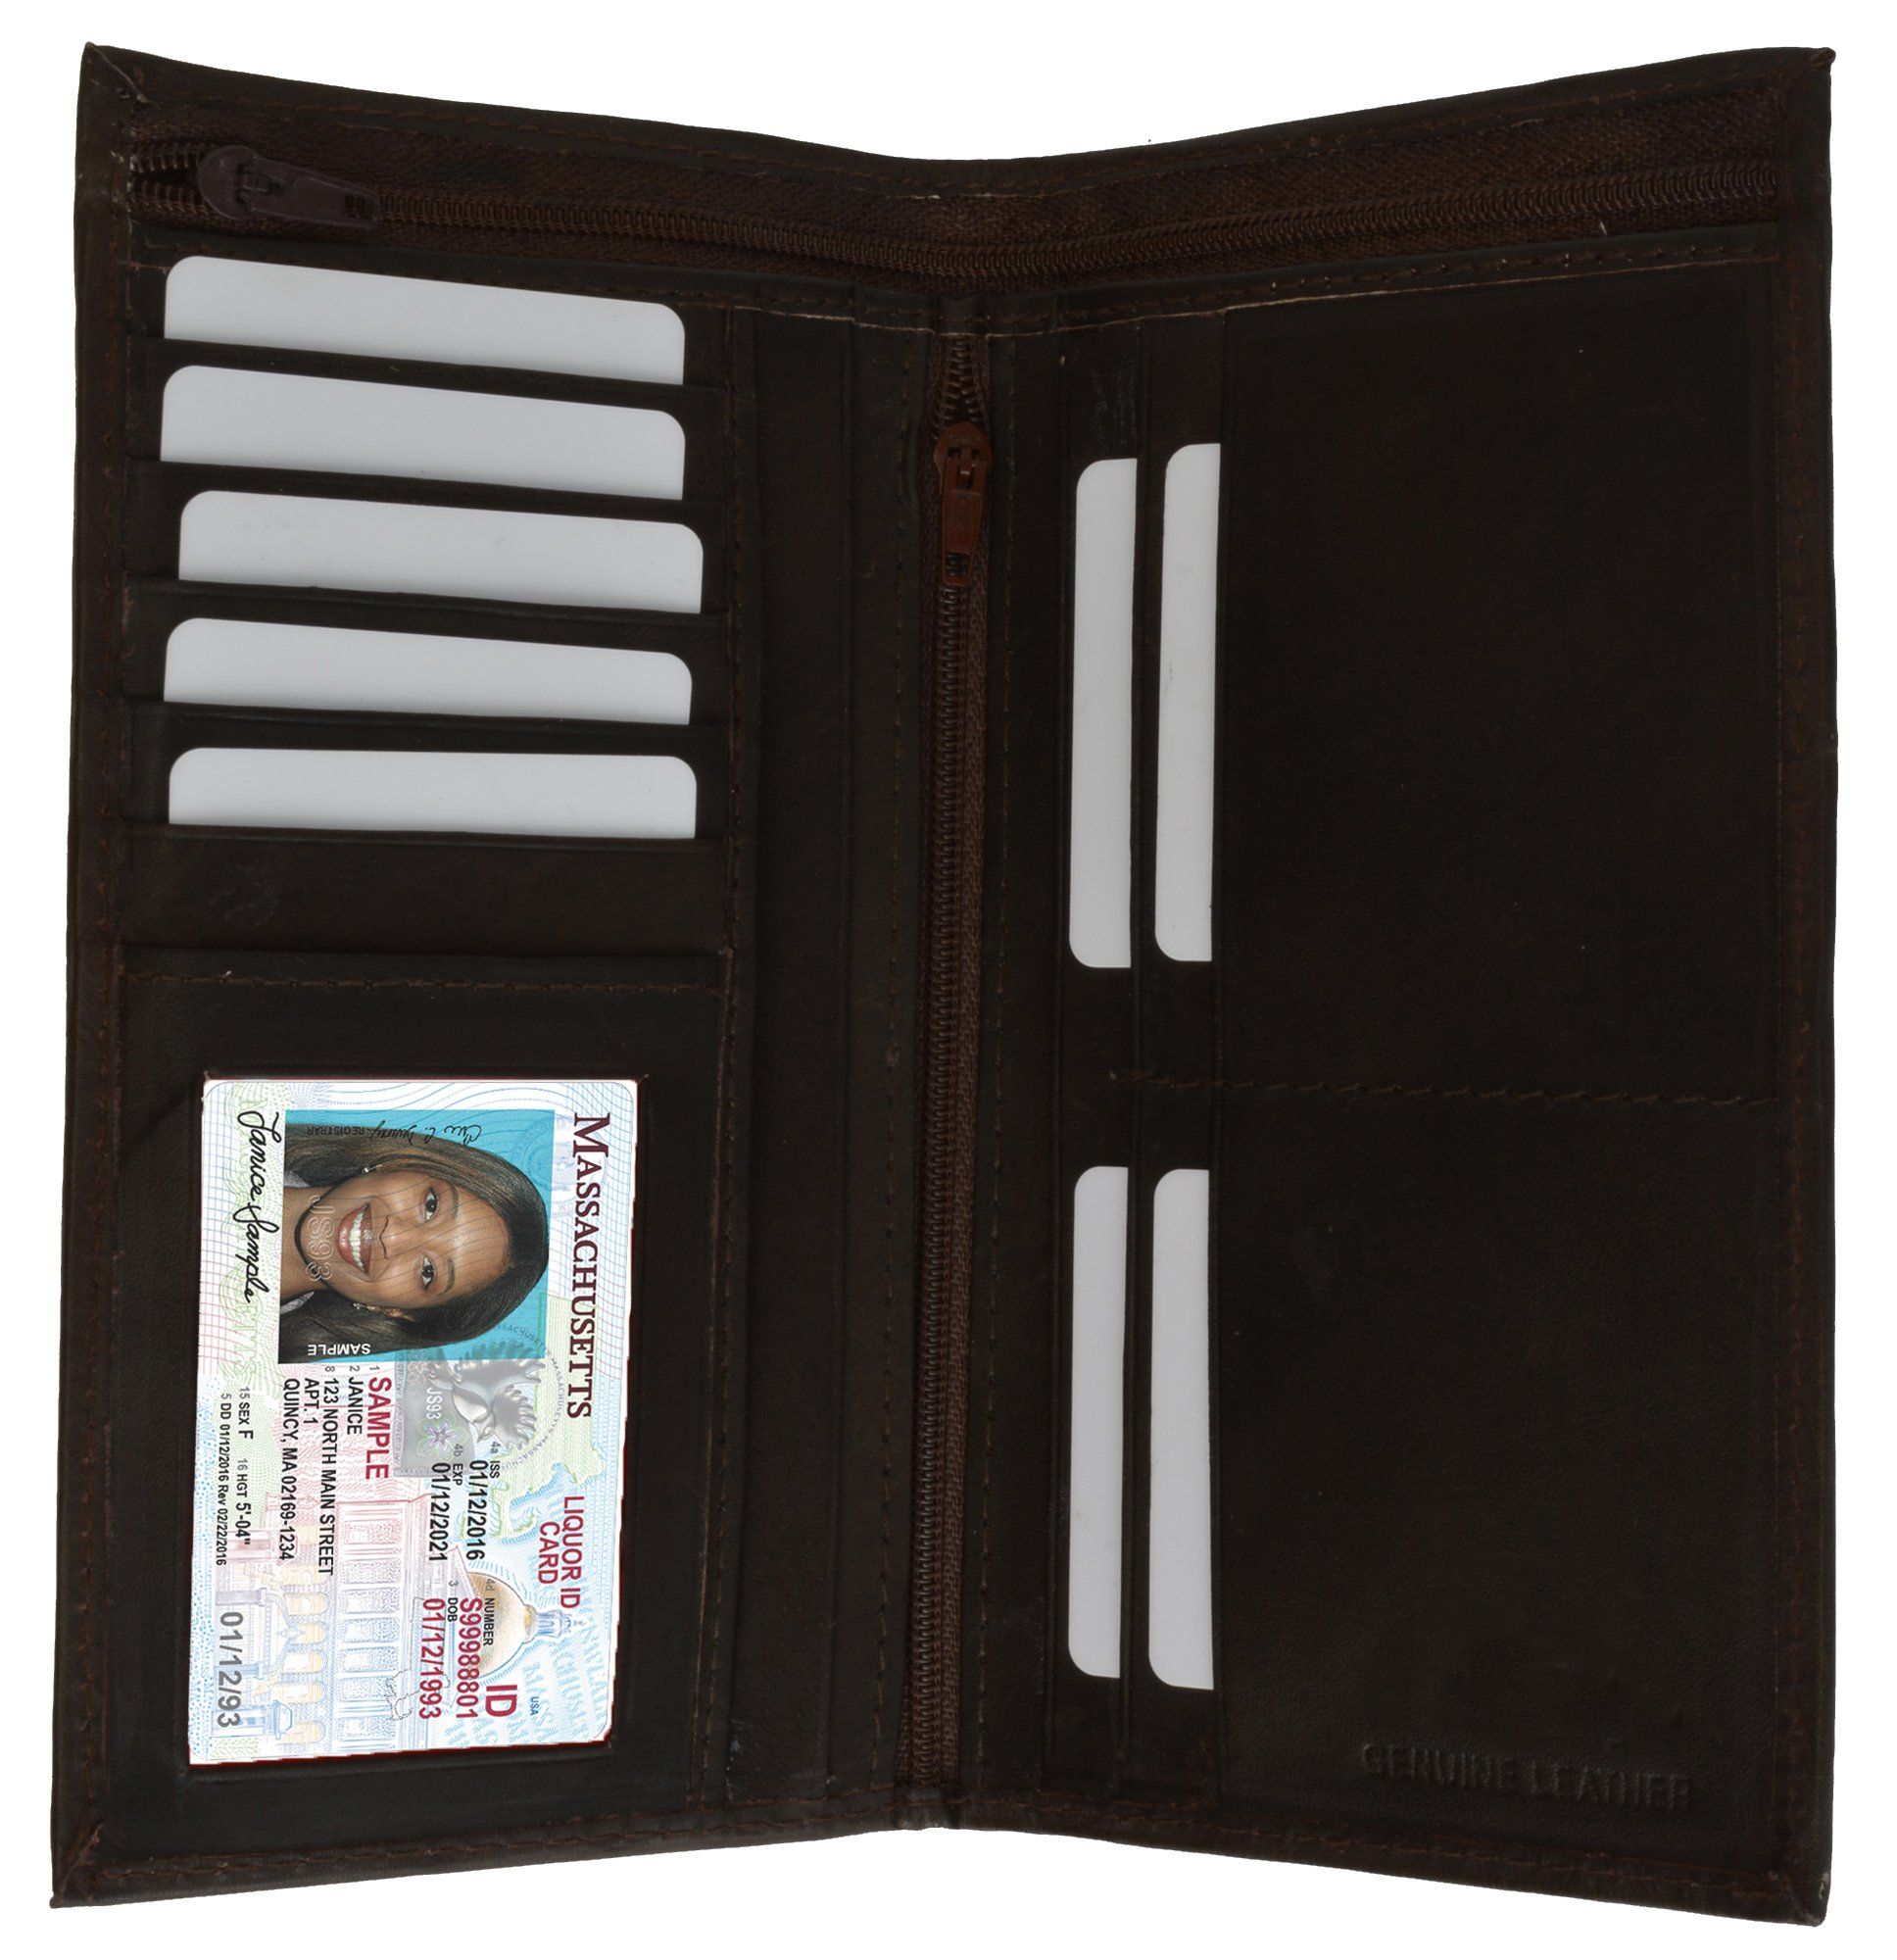 Leather Card Holder Wallet